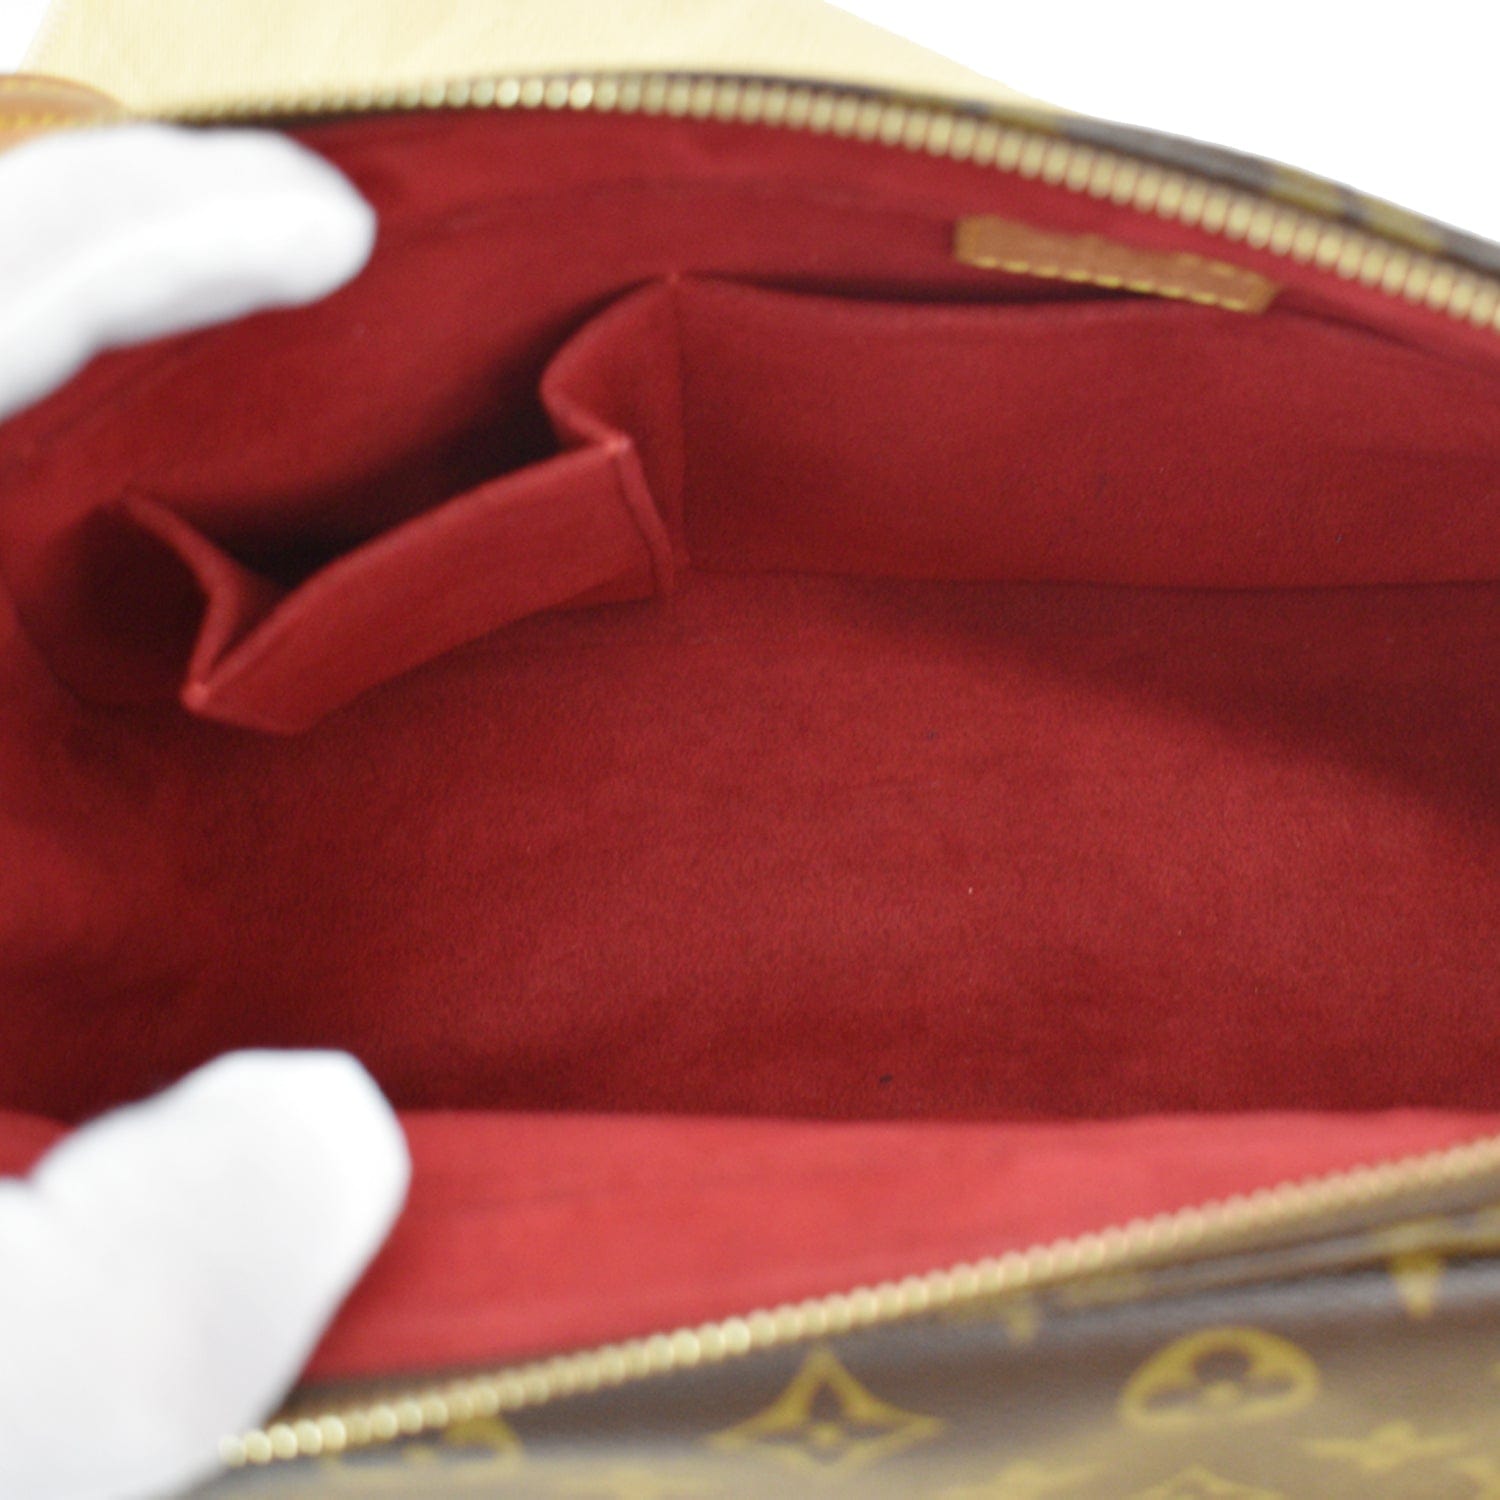 Louis Vuitton Vintage - Monogram Viva Cite GM Bag - Brown - Leather Handbag  - Luxury High Quality - Avvenice